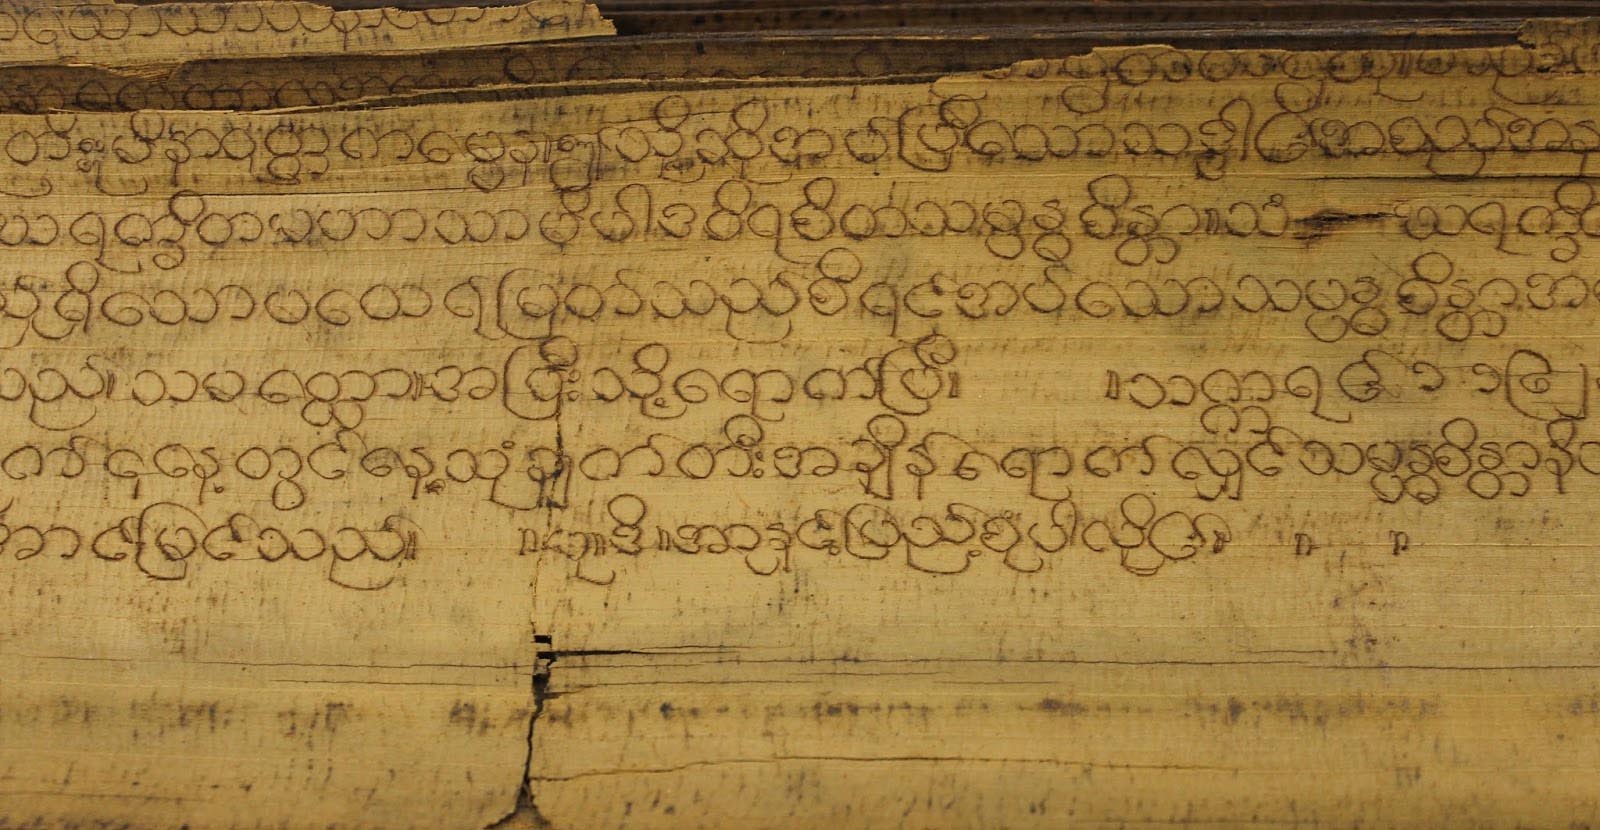 Burmese Palm Leaf Manuscripts Special Collections Spotlight